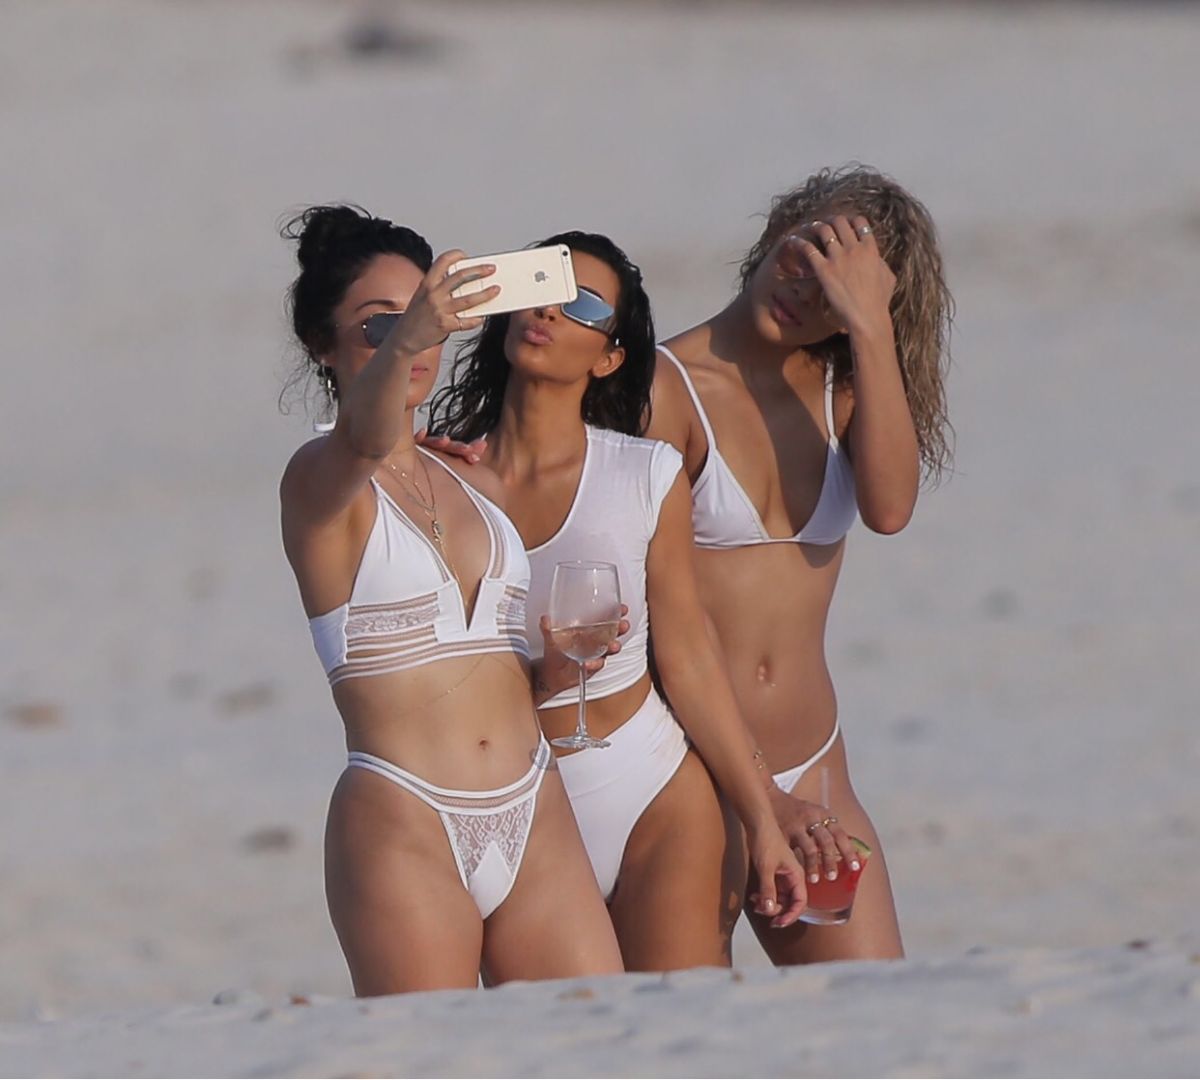 kim-kardashian-in-bikini-with-her-girlfriends-on-beach-in-mexico-08-20-2016...